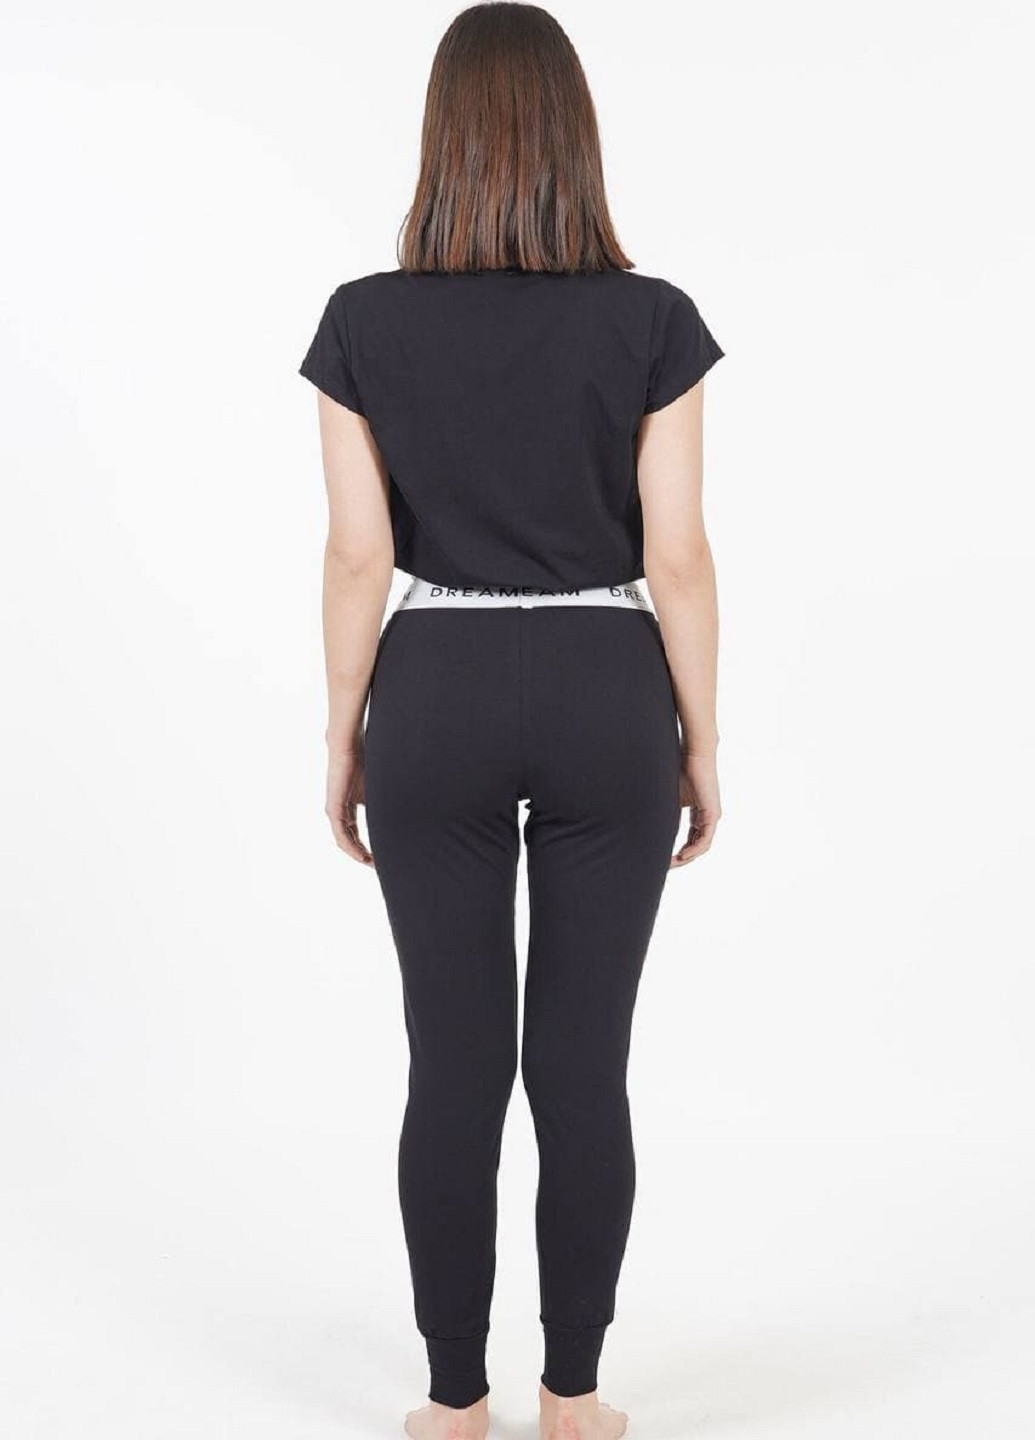 Черная всесезон комплект (футболка, брюки) футболка + брюки Vienetta